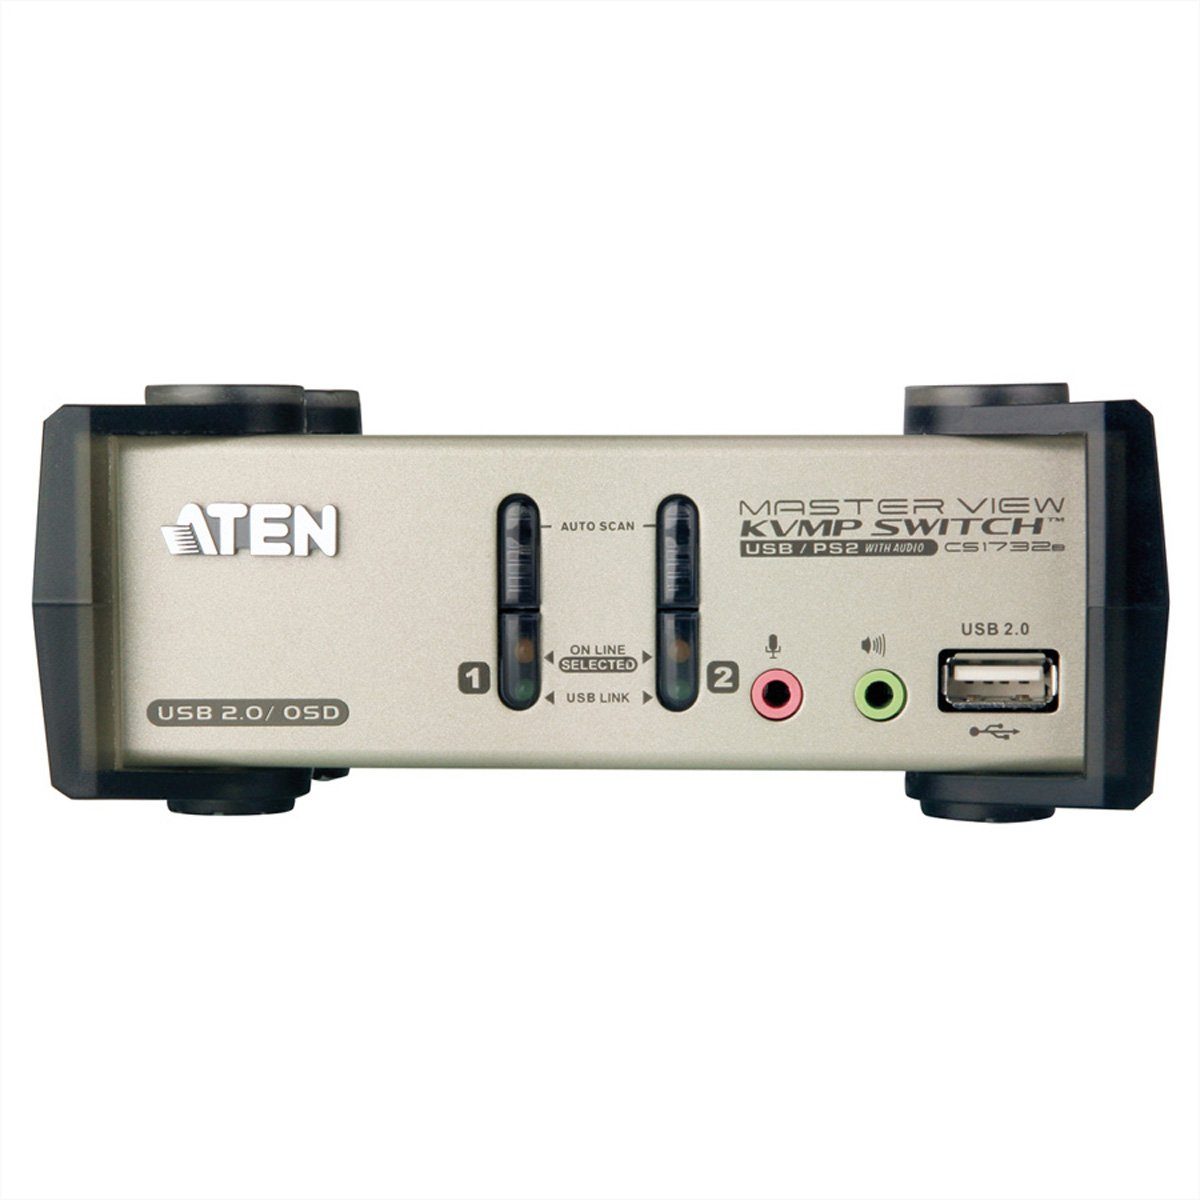 Aten CS1732B KVM Switch VGA, PS/2-USB, Audio, USB-Hub, 2 Ports Computer-Adapter